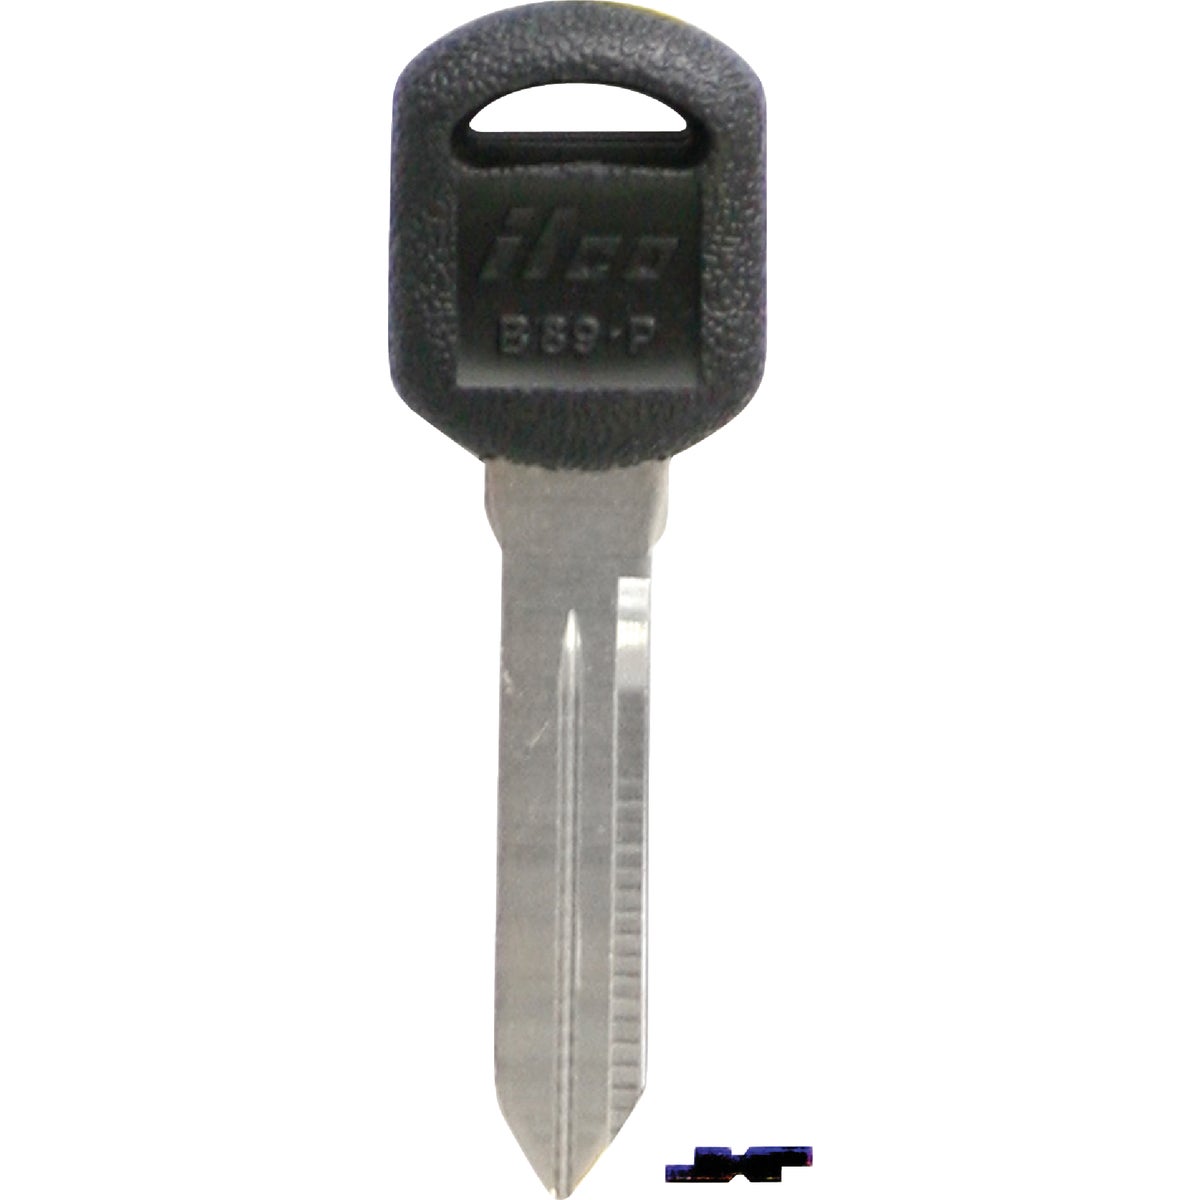 ILCO GM Nickel Plated Automotive Key, B89-P / B89P (5-Pack)